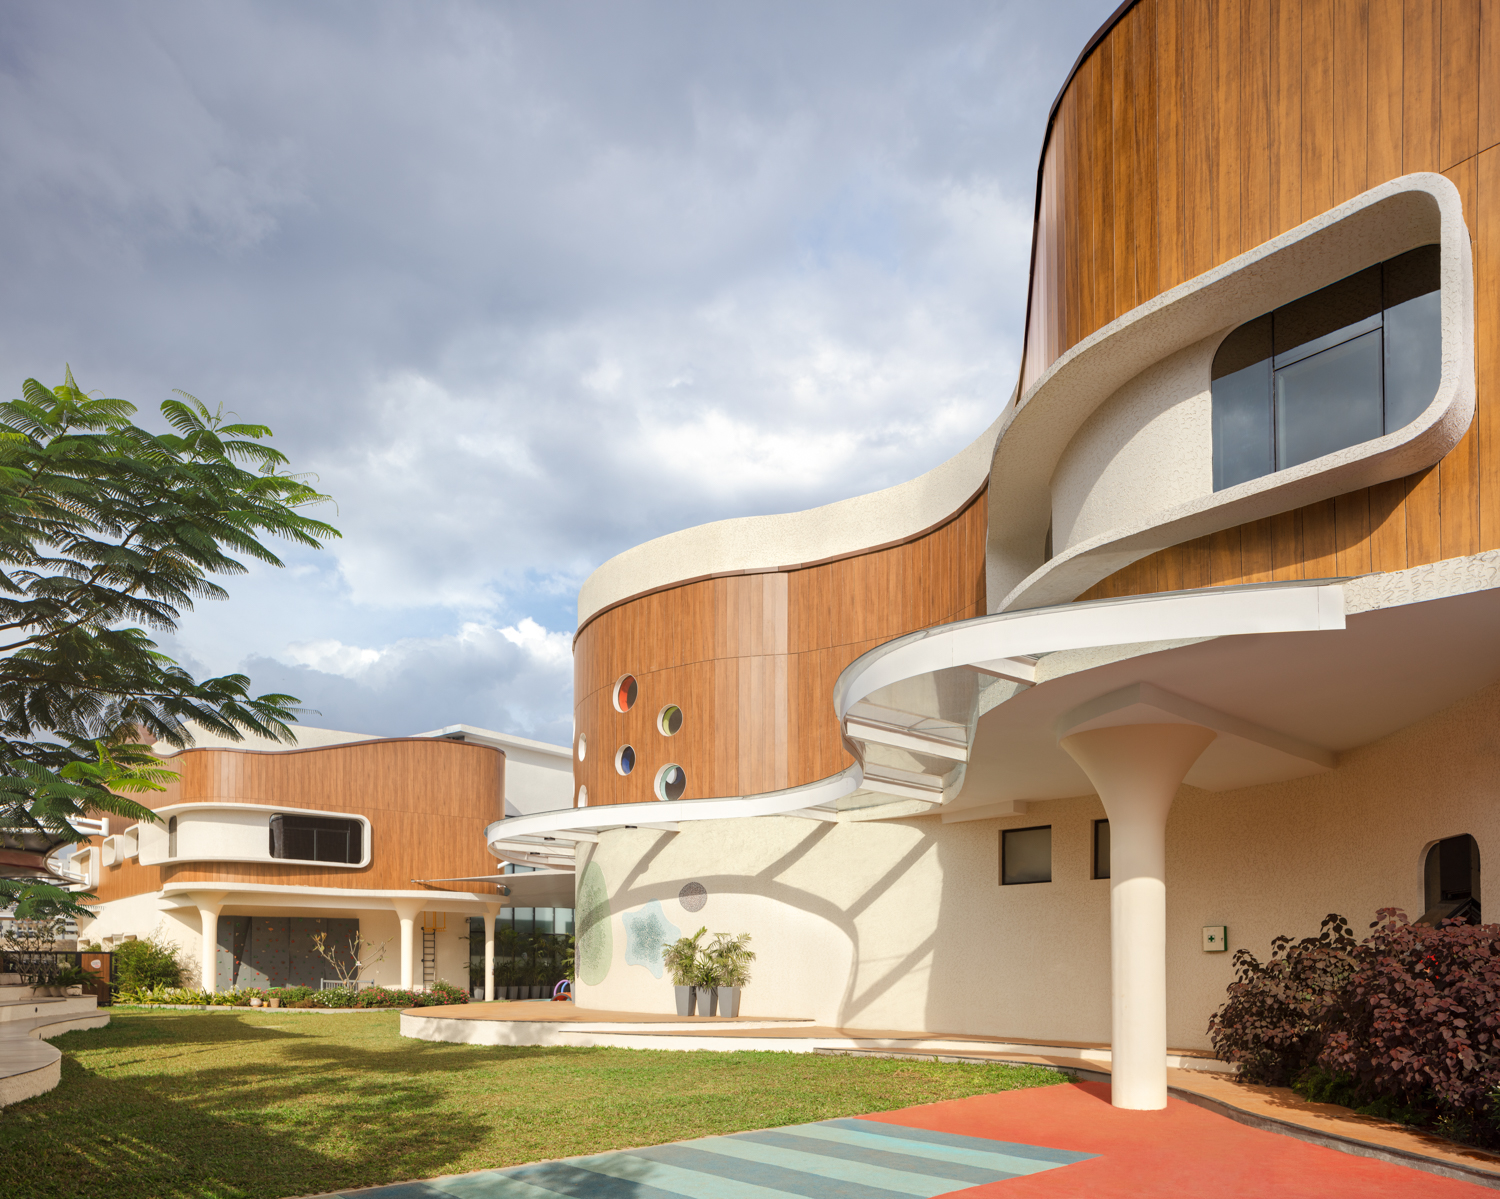 Kai Early Years, Bengaluru designed by Education Design Architects.